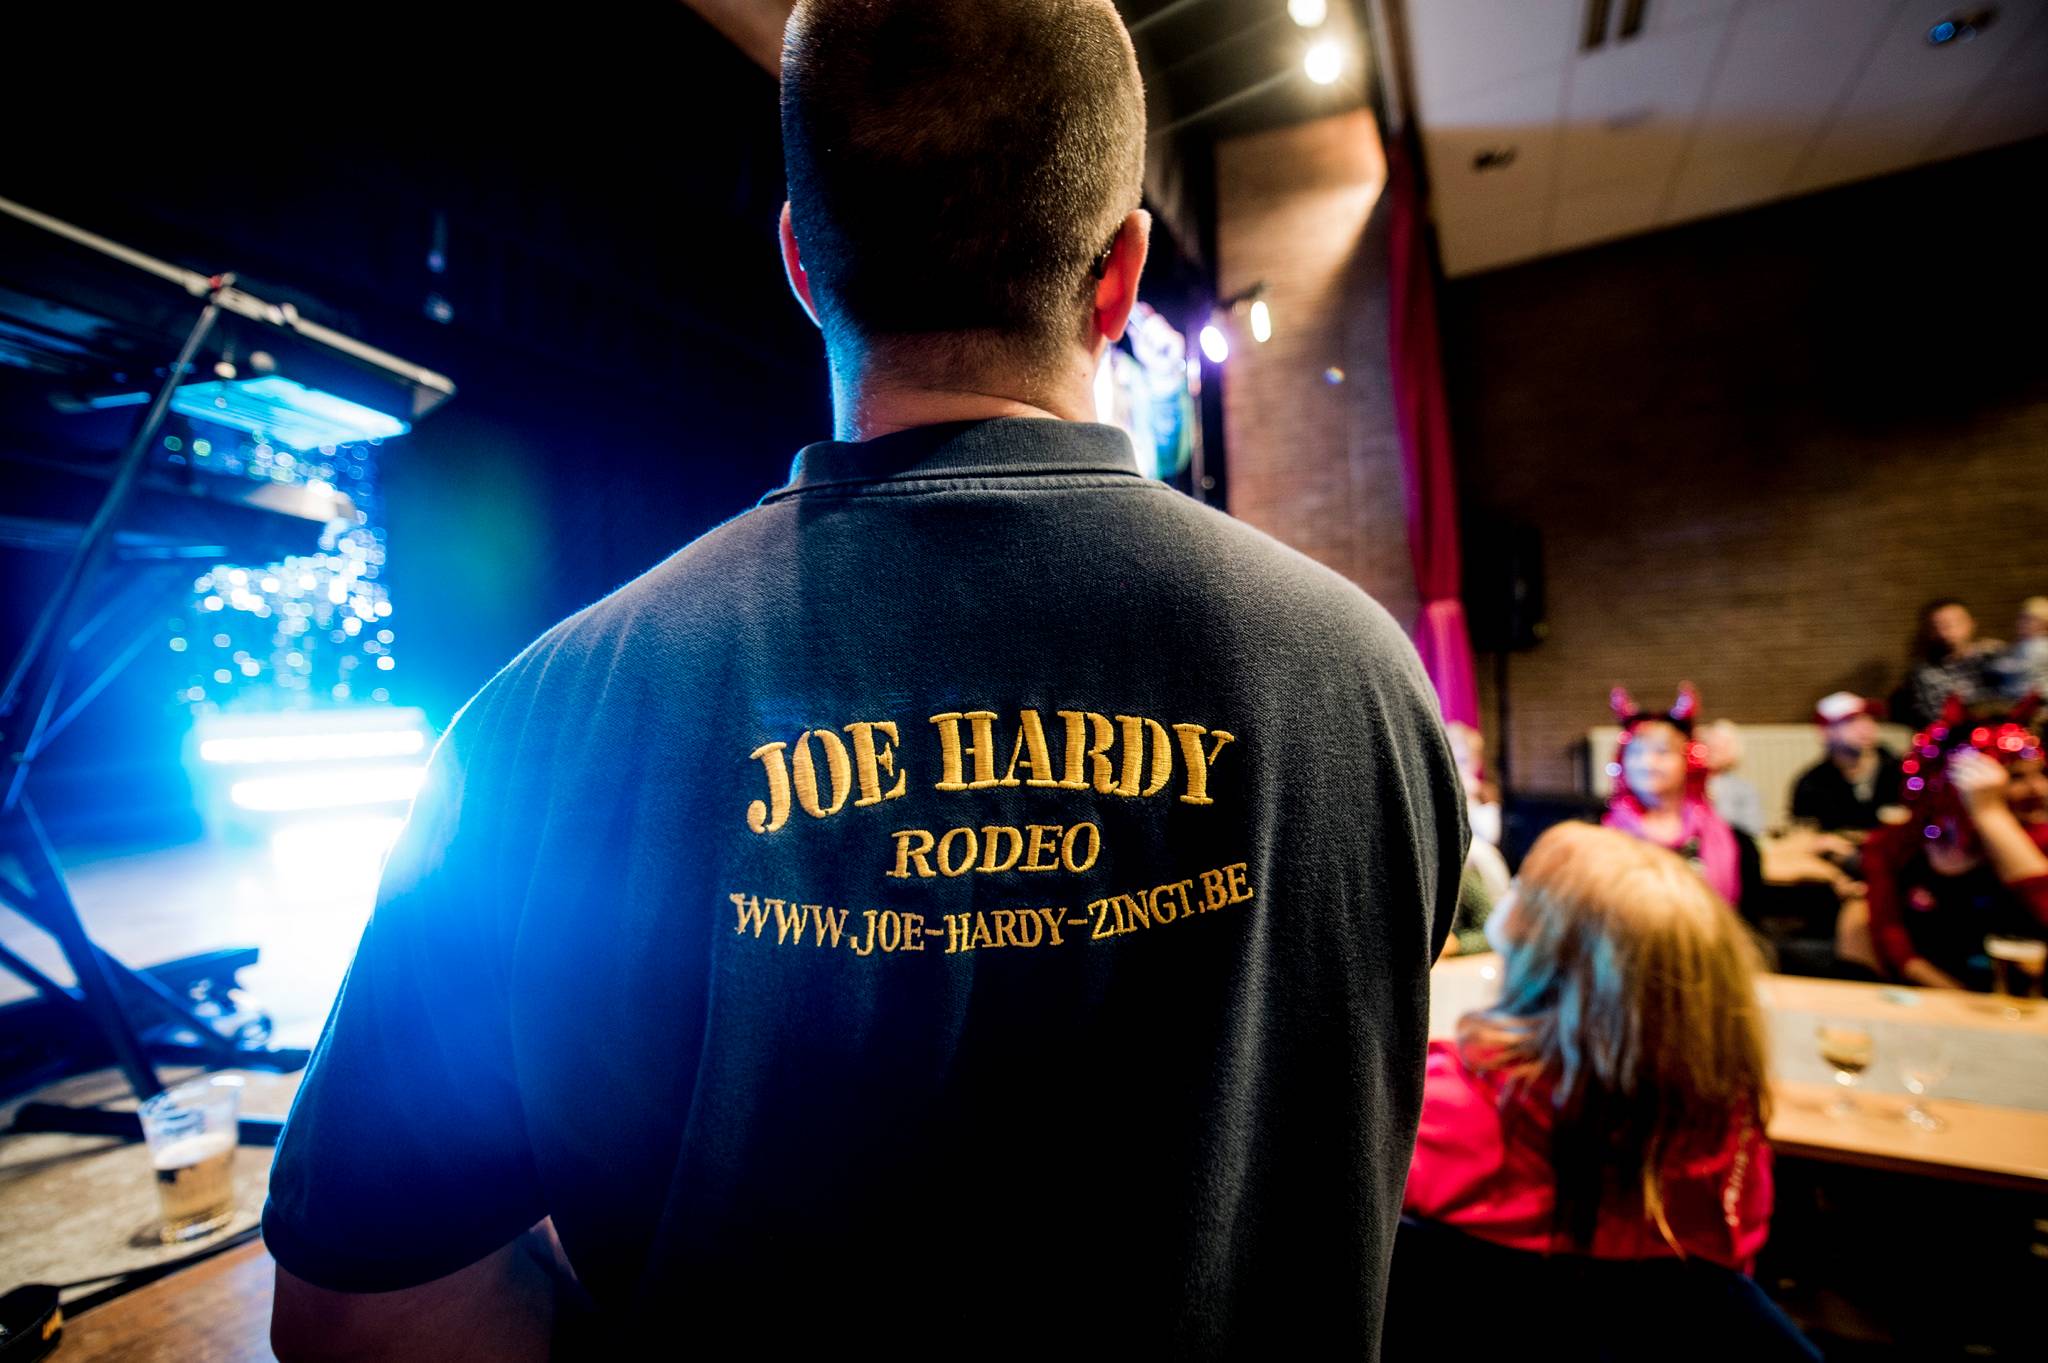 Joe Hardy